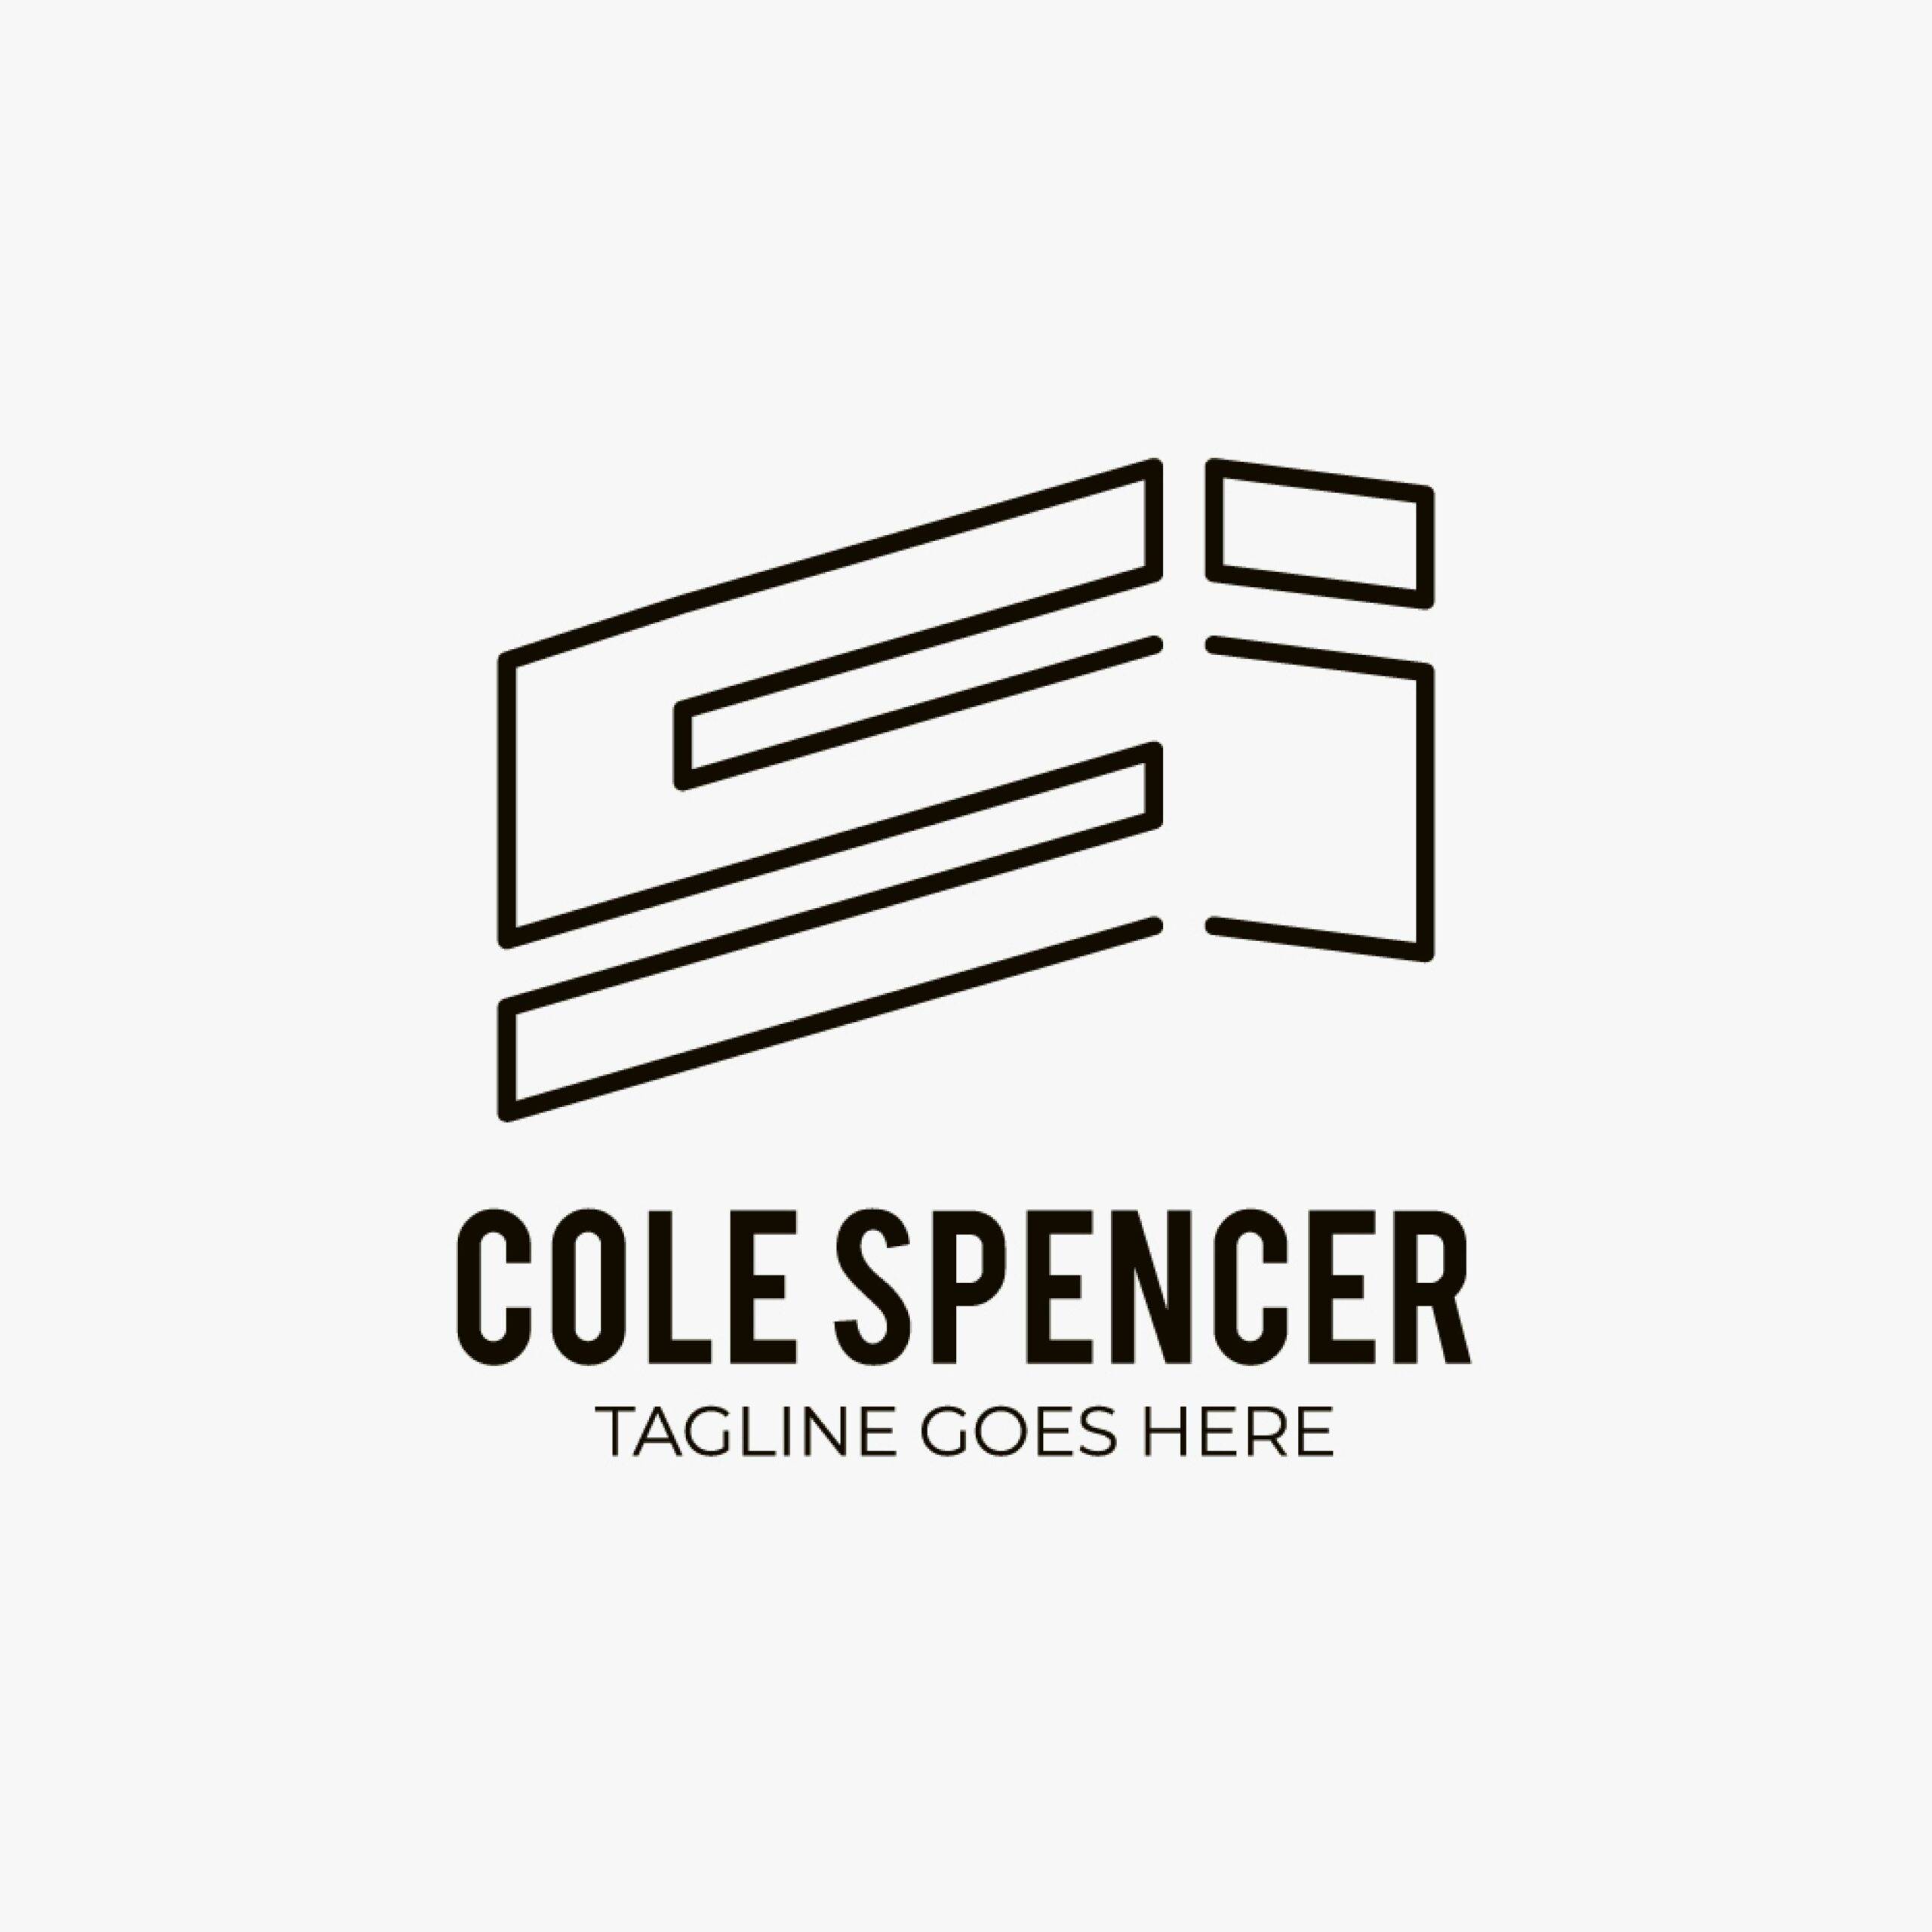 Cole spencer simple logo designs